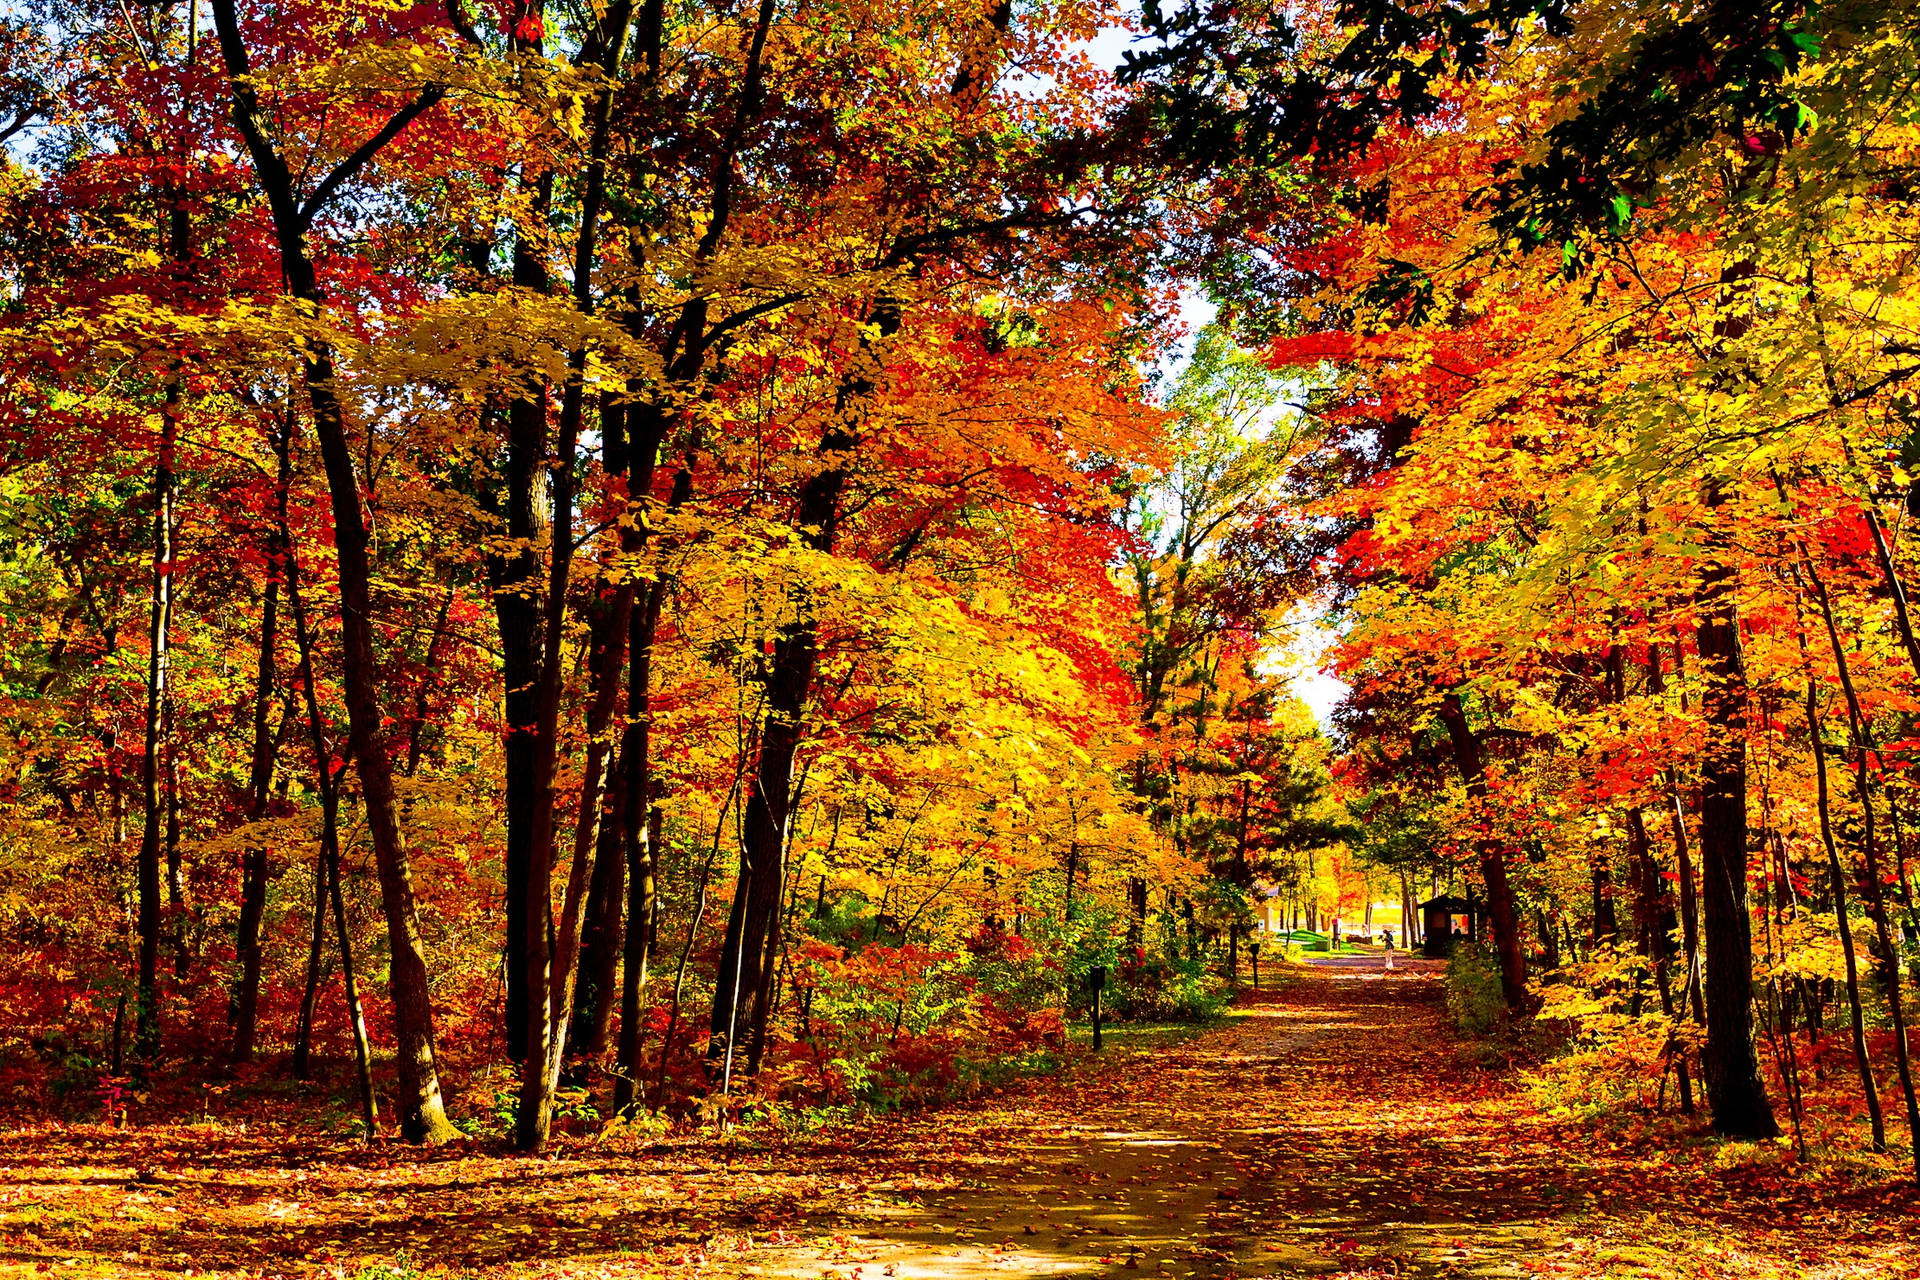 USA Autumn Season Wallpaper